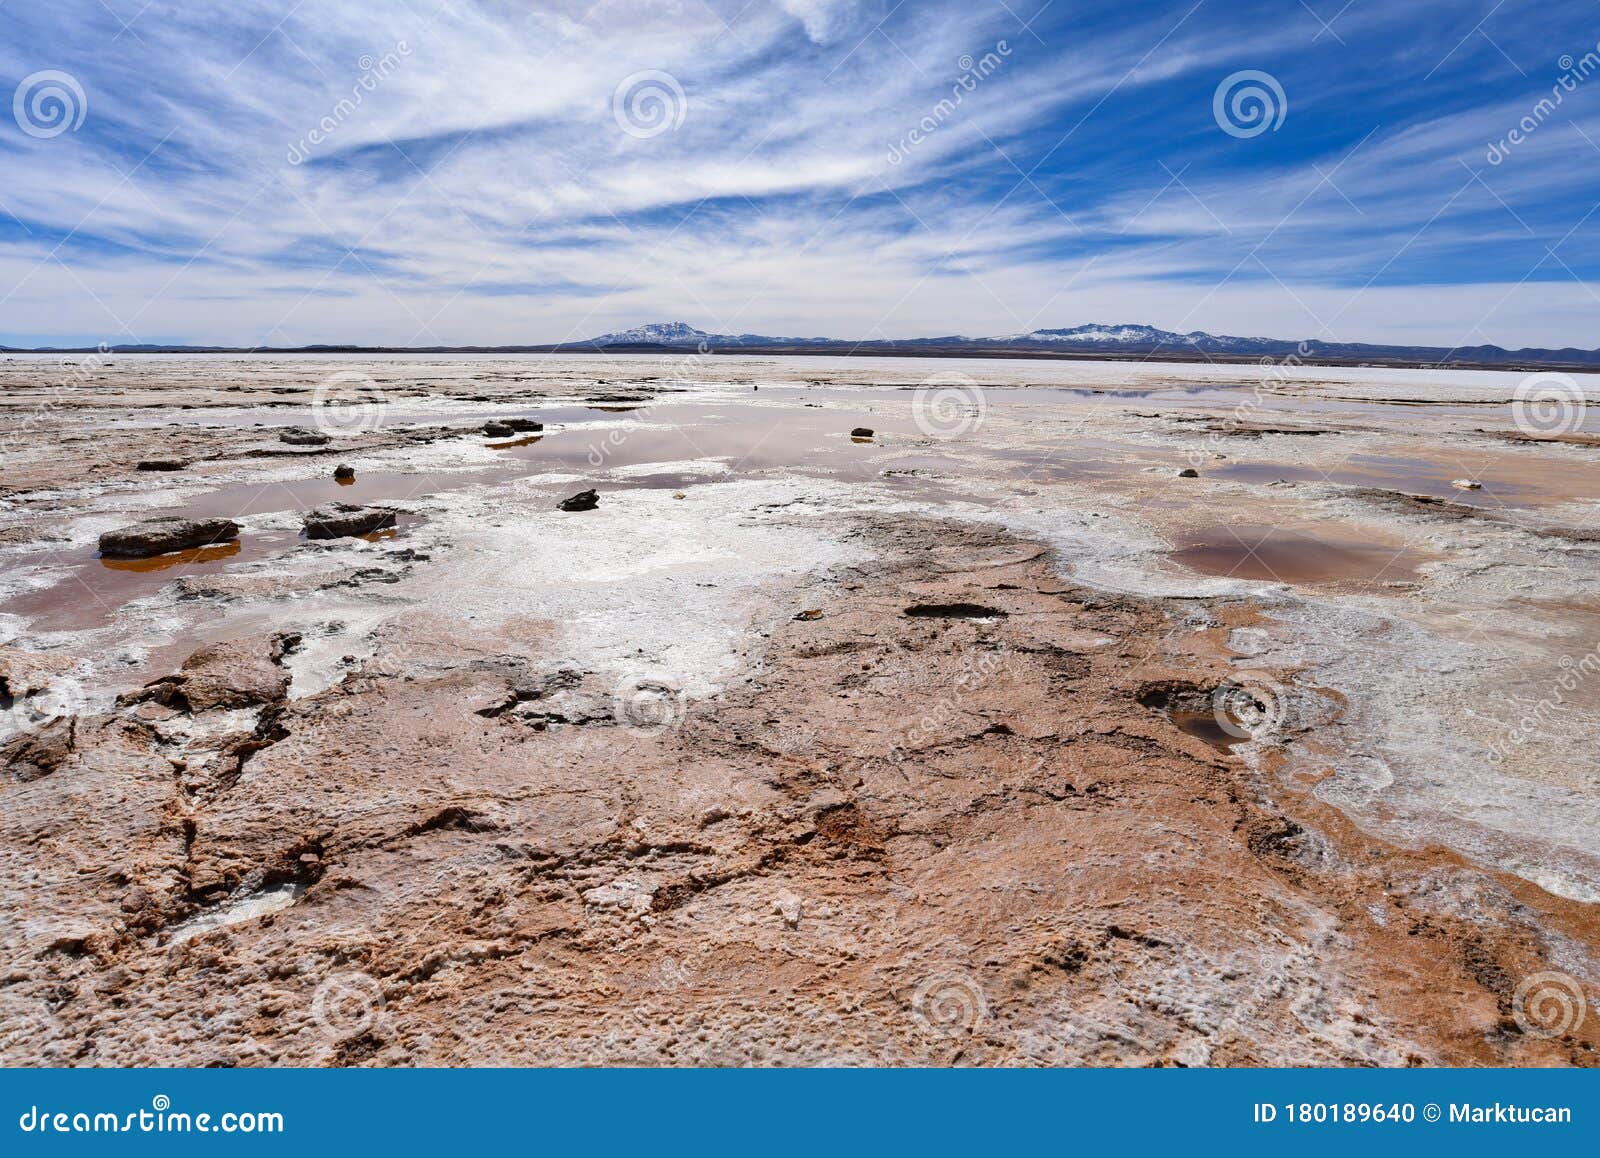 ojos del sal, volcanic formations on the edge of the salar de uyuni, near the town of colchani, uyuni, bolivia